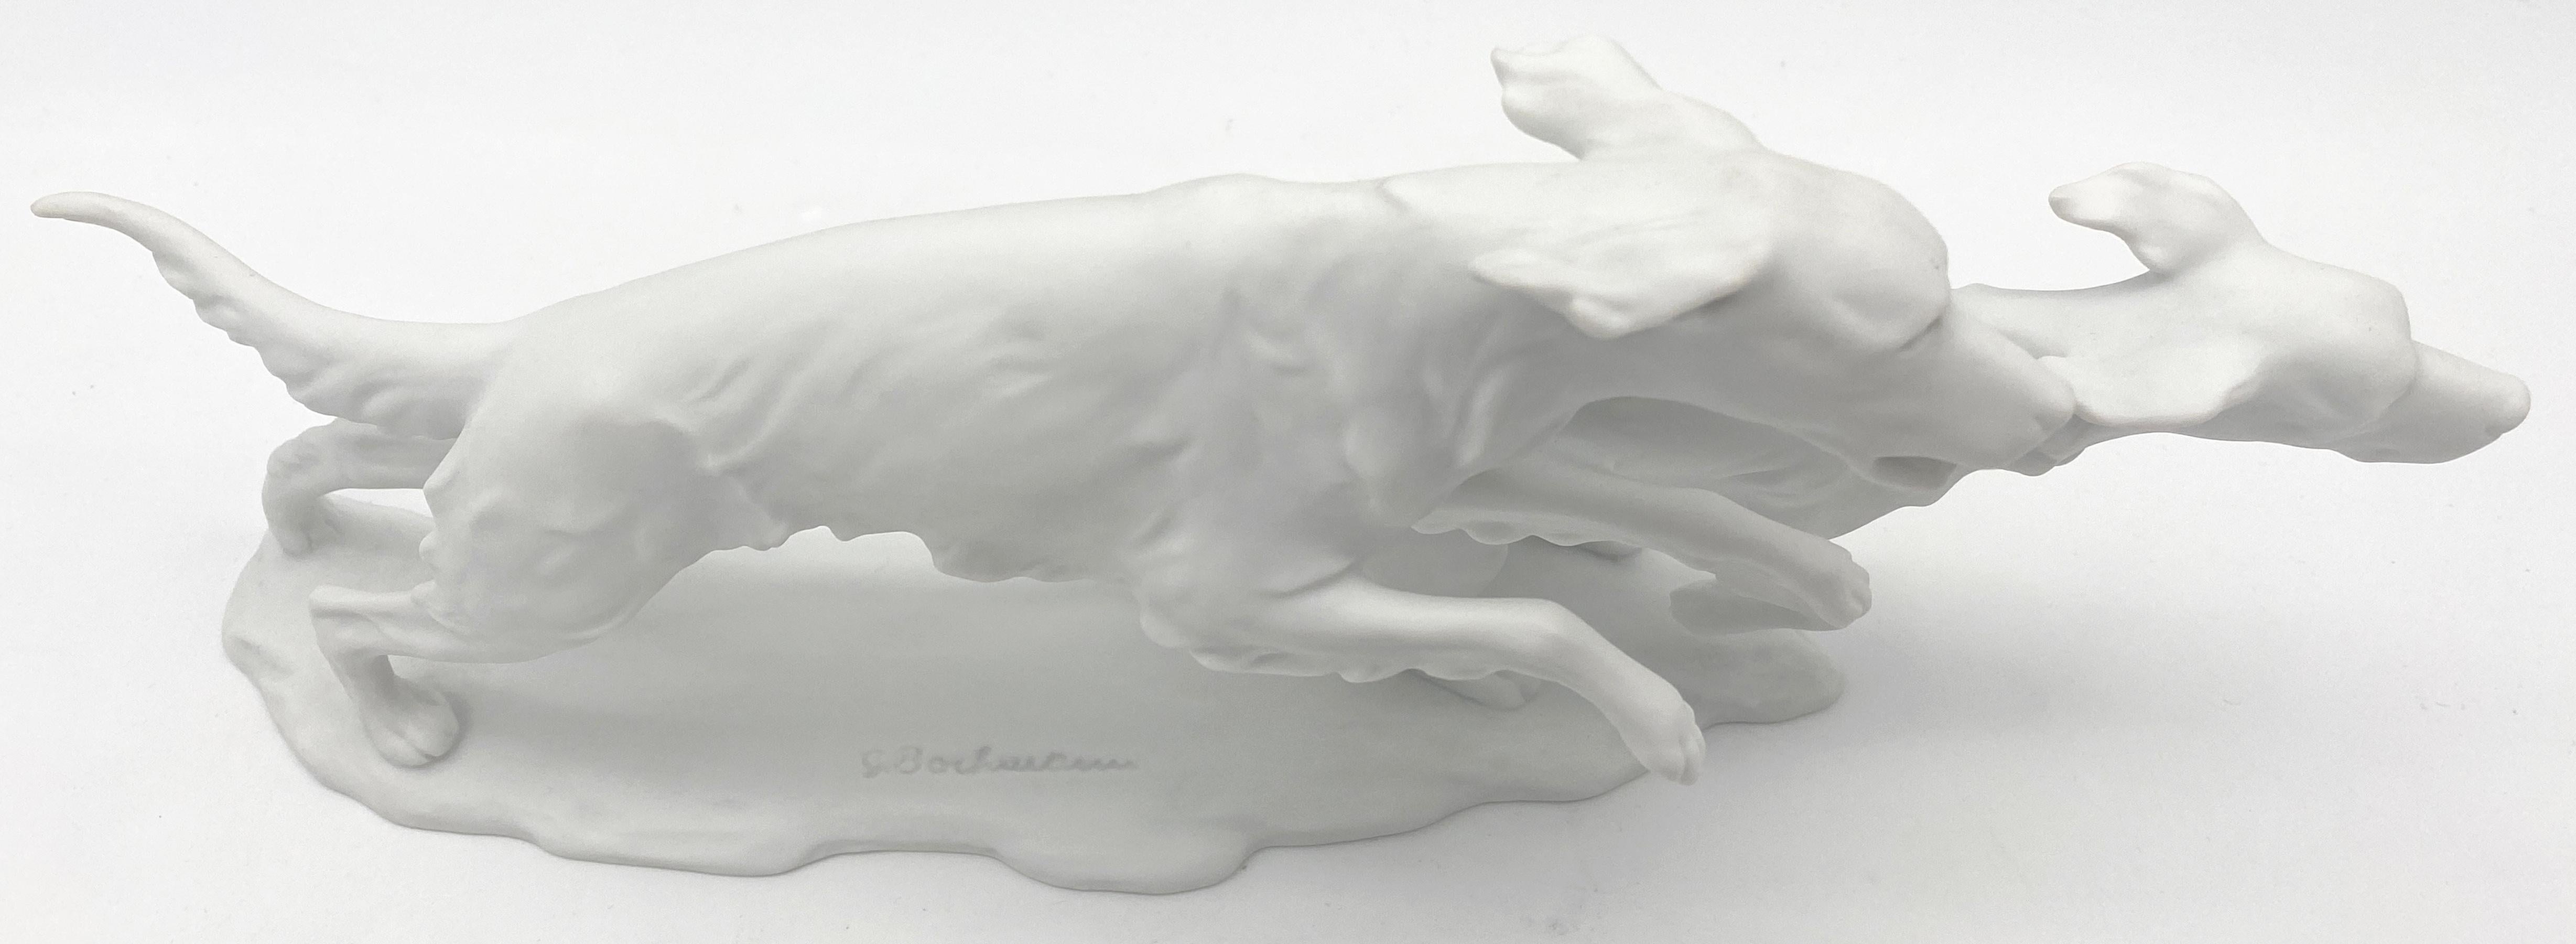  Kaiser Bisque Porcelain 'Running Dogs' by G. Bochuraun  For Sale 2